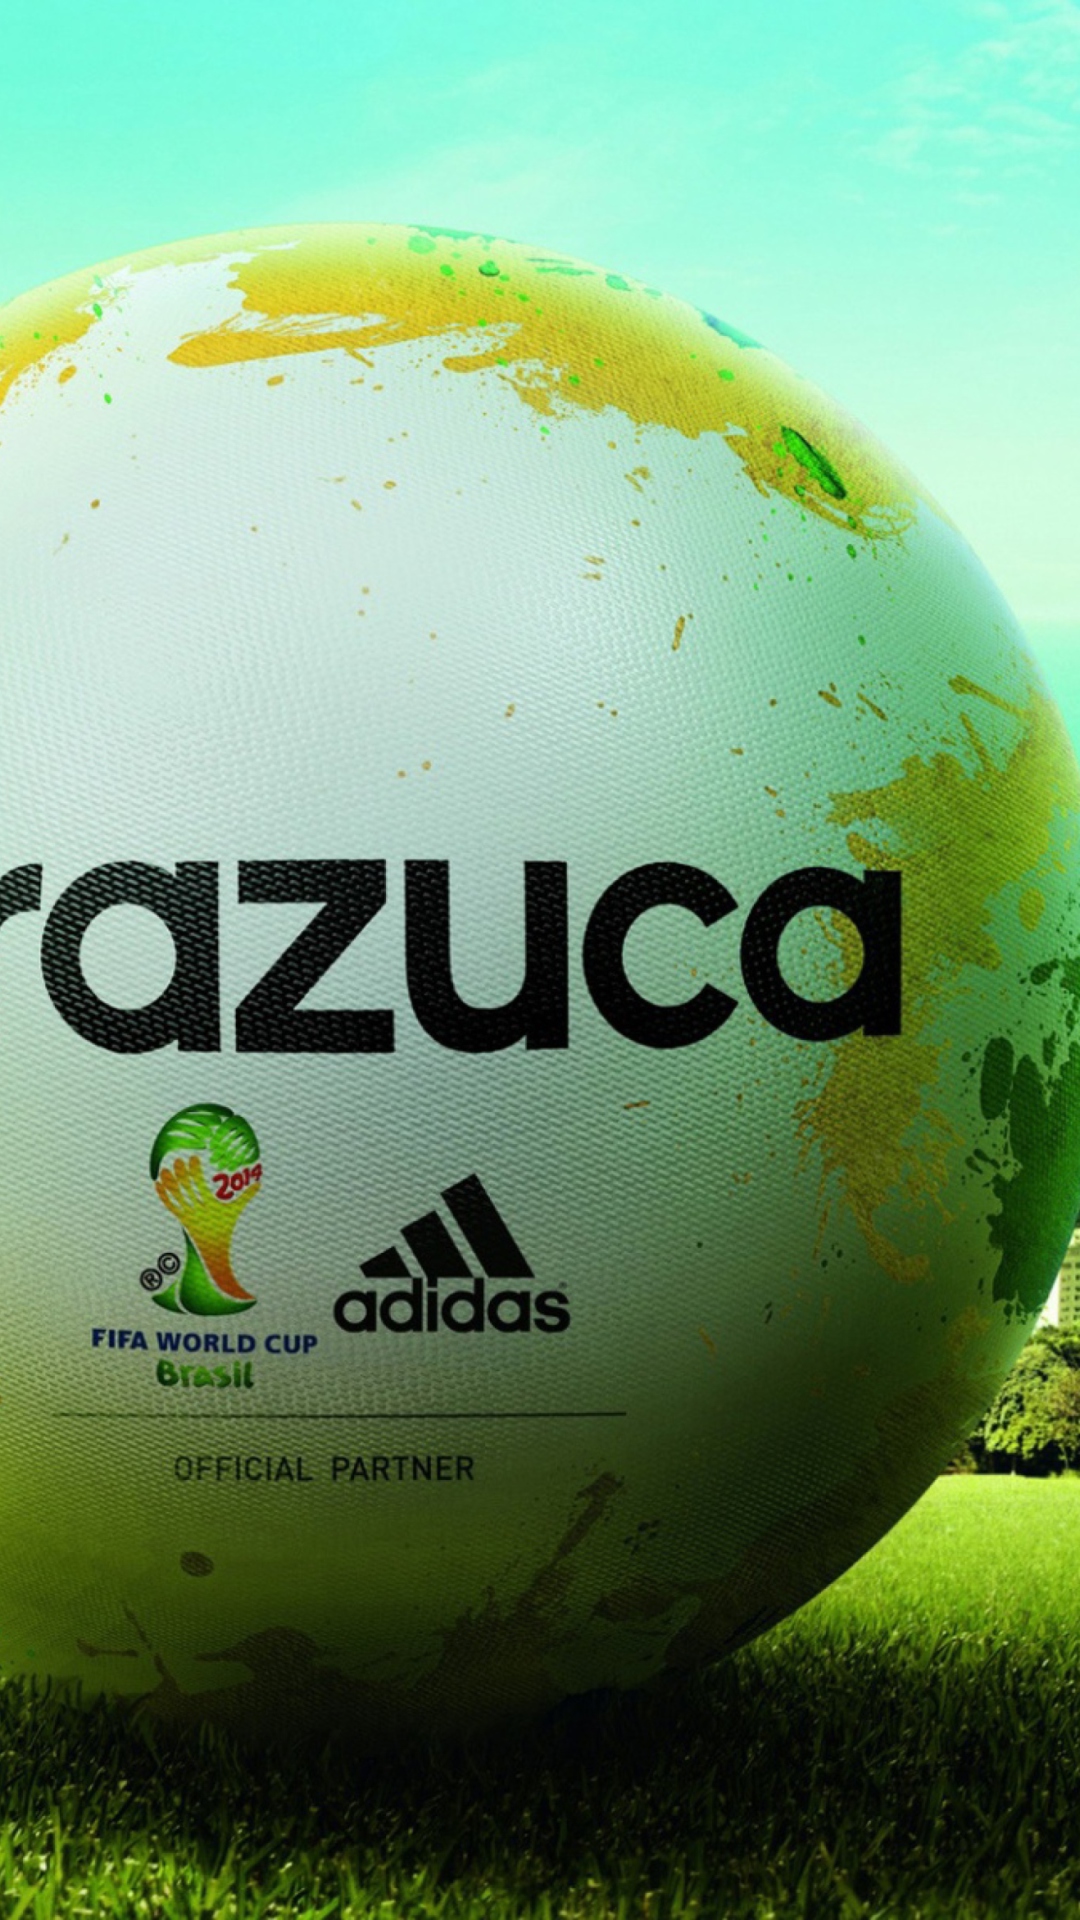 Adidas Brazuca Match Ball FIFA World Cup 2014 wallpaper 1080x1920